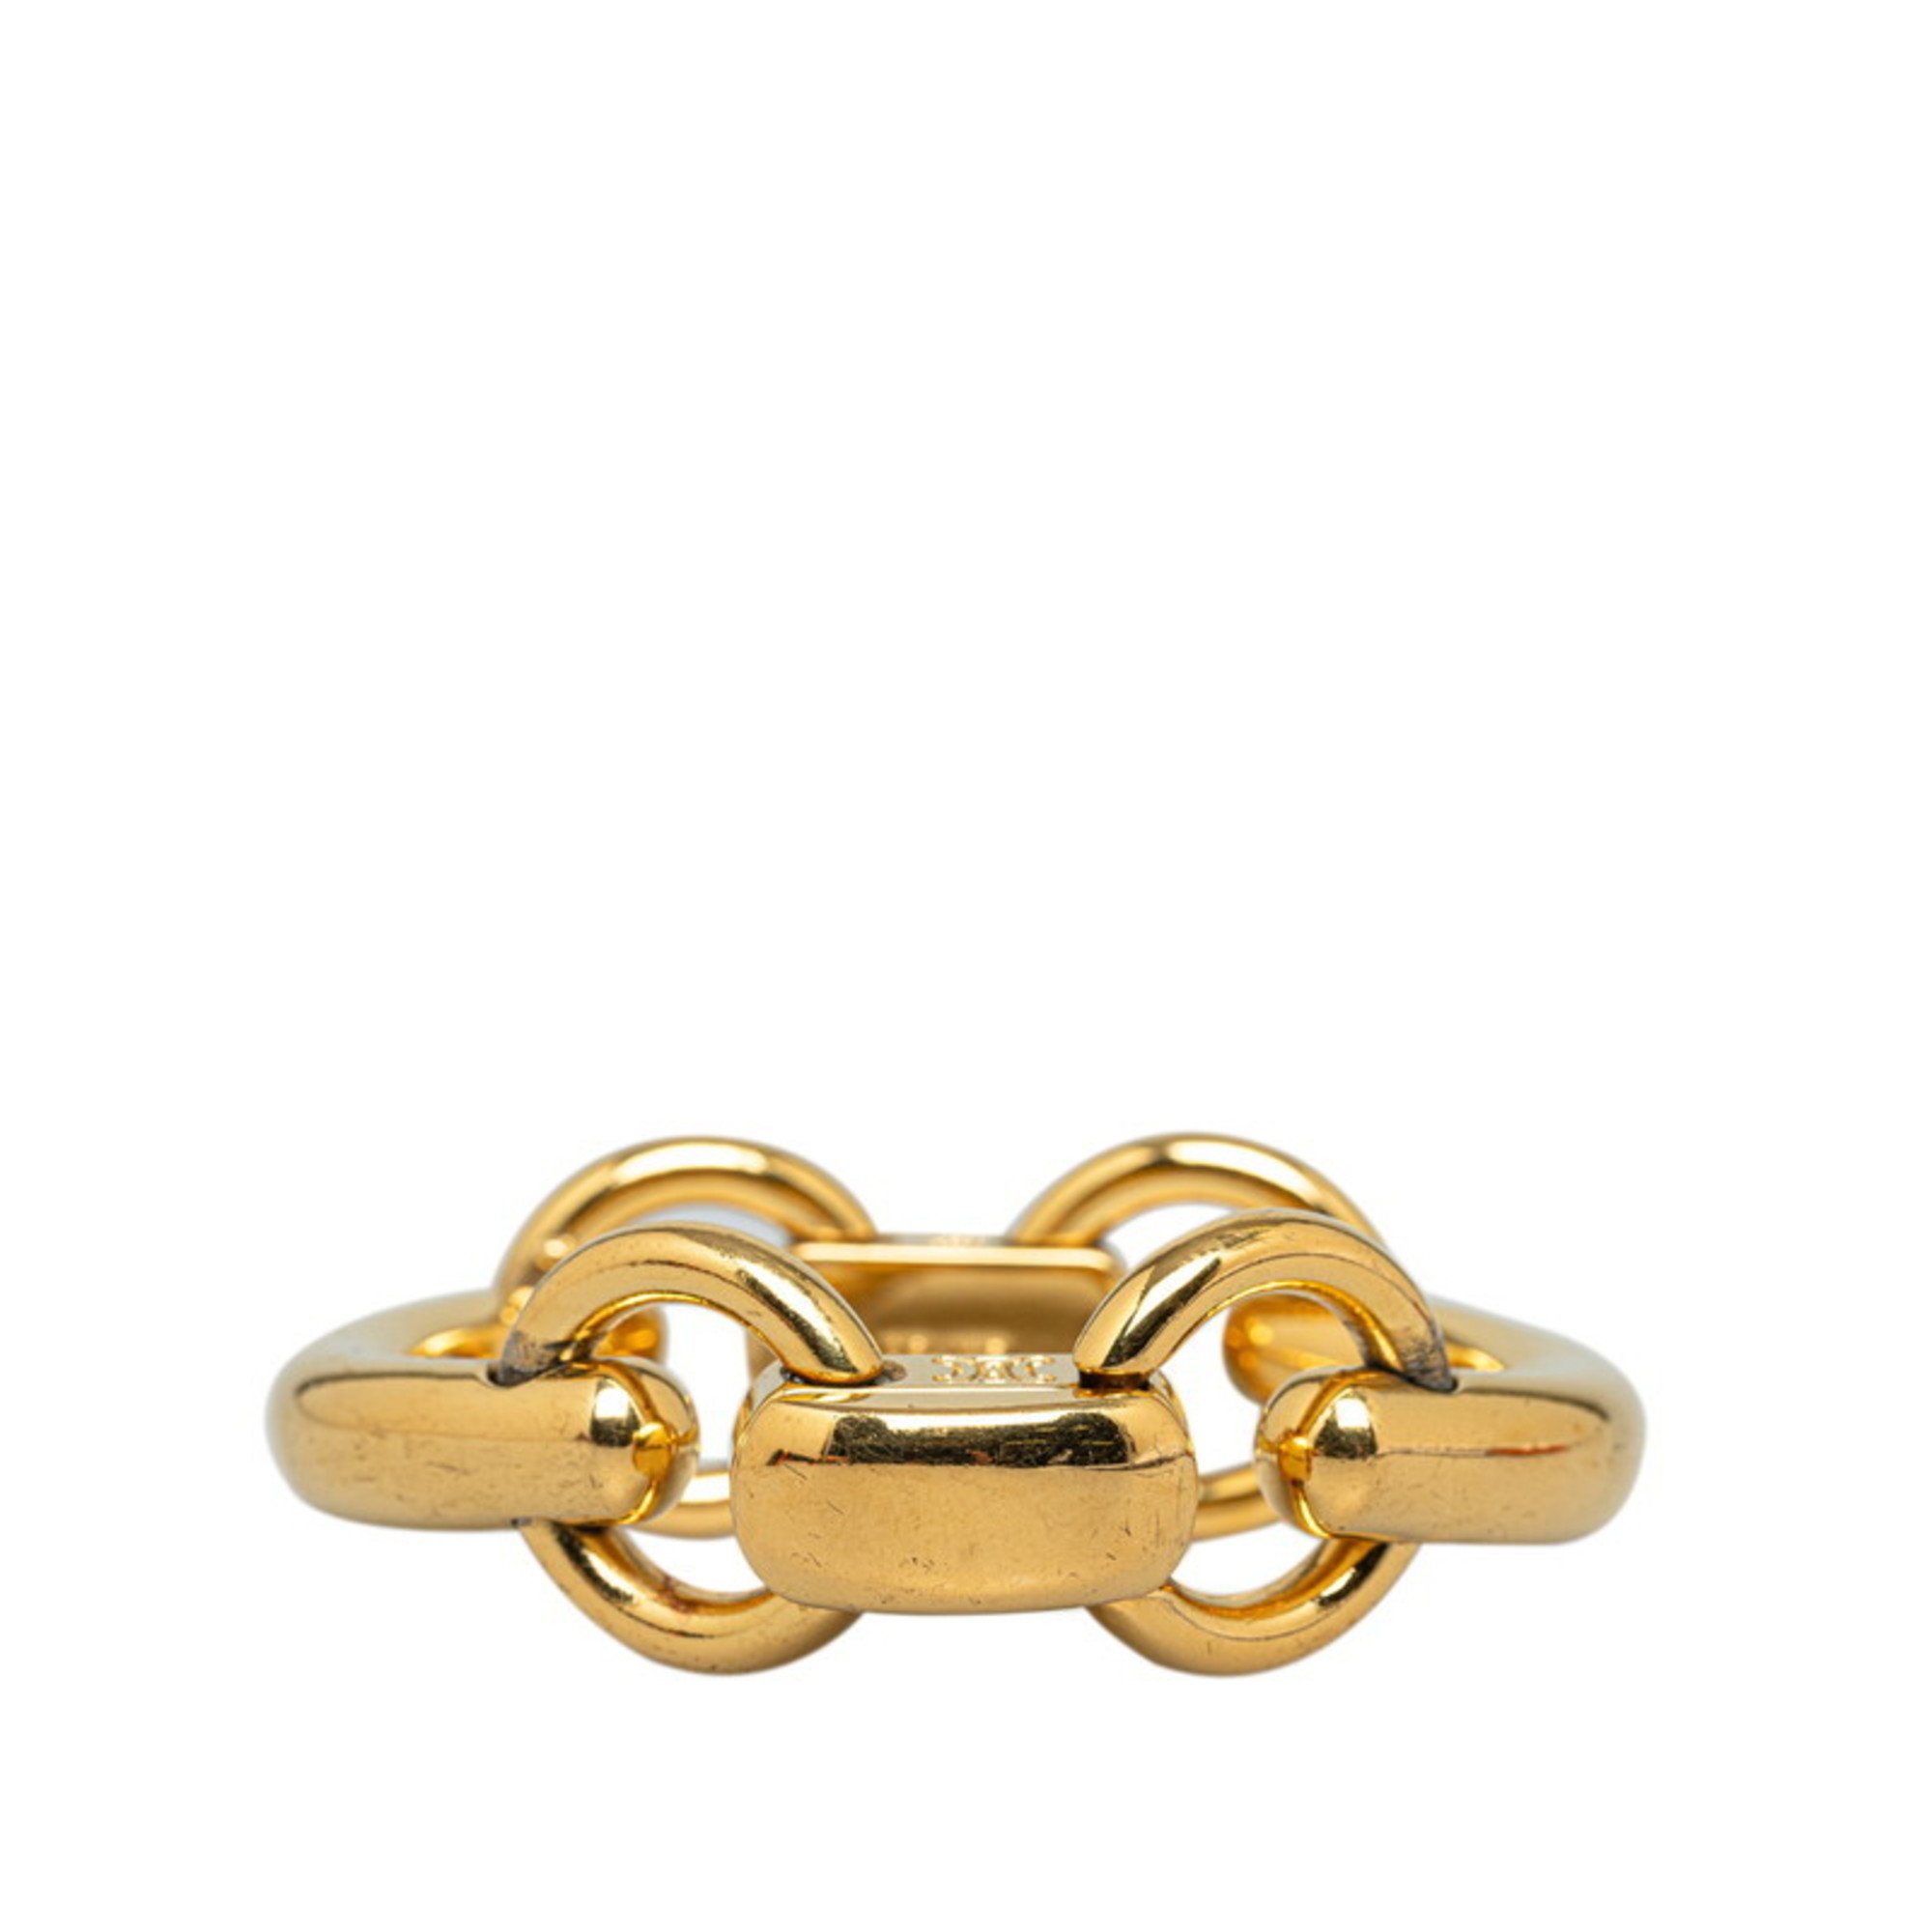 CELINE Bracelet Bangle Gold Plated Women's